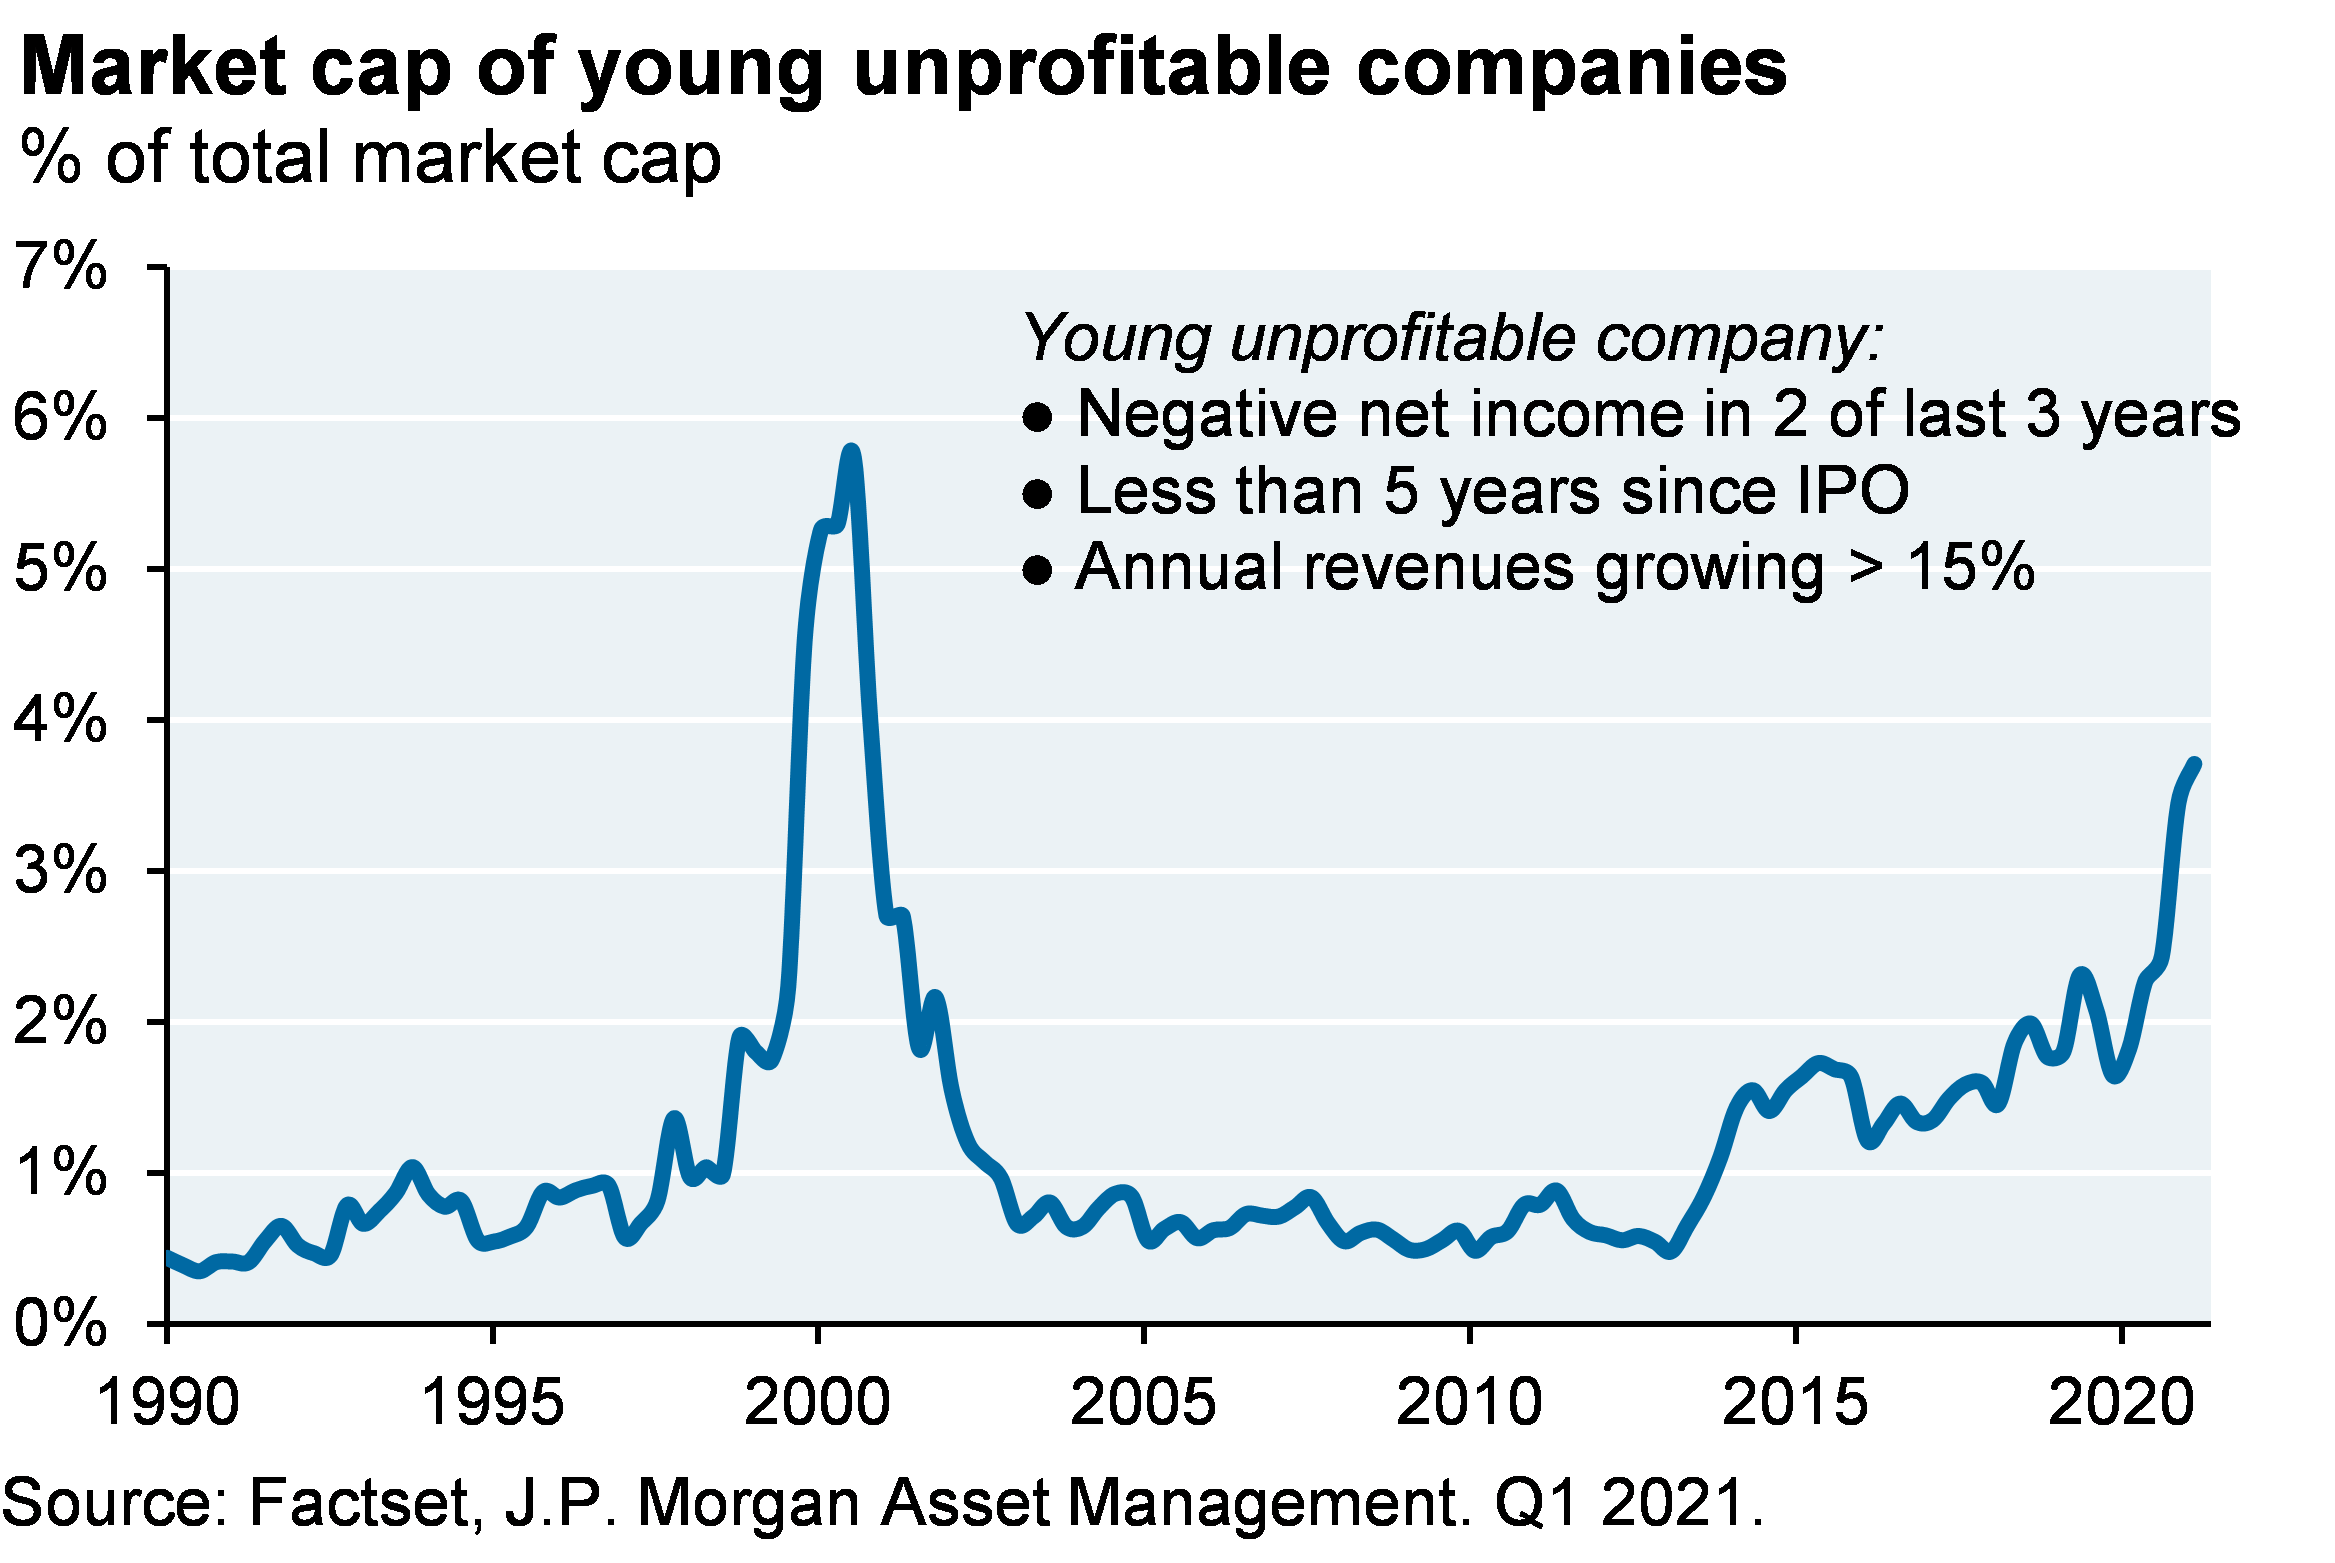 Market cap of young unprofitable companies